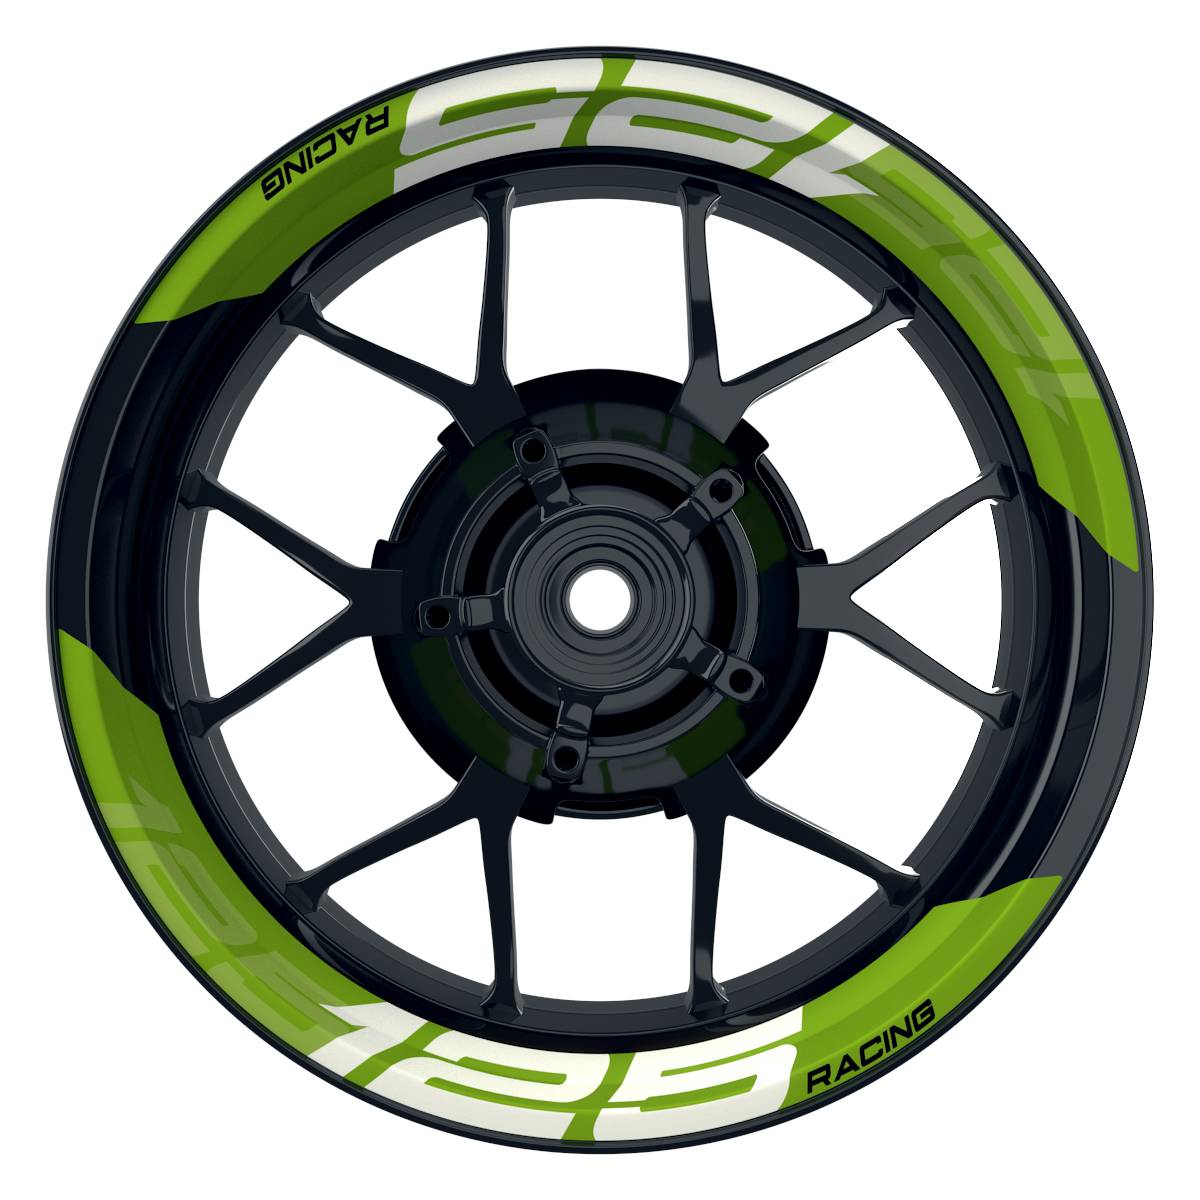 Wheelsticker Felgenaufkleber KTM Racing 125 einfarbig V2 gruen Frontansicht